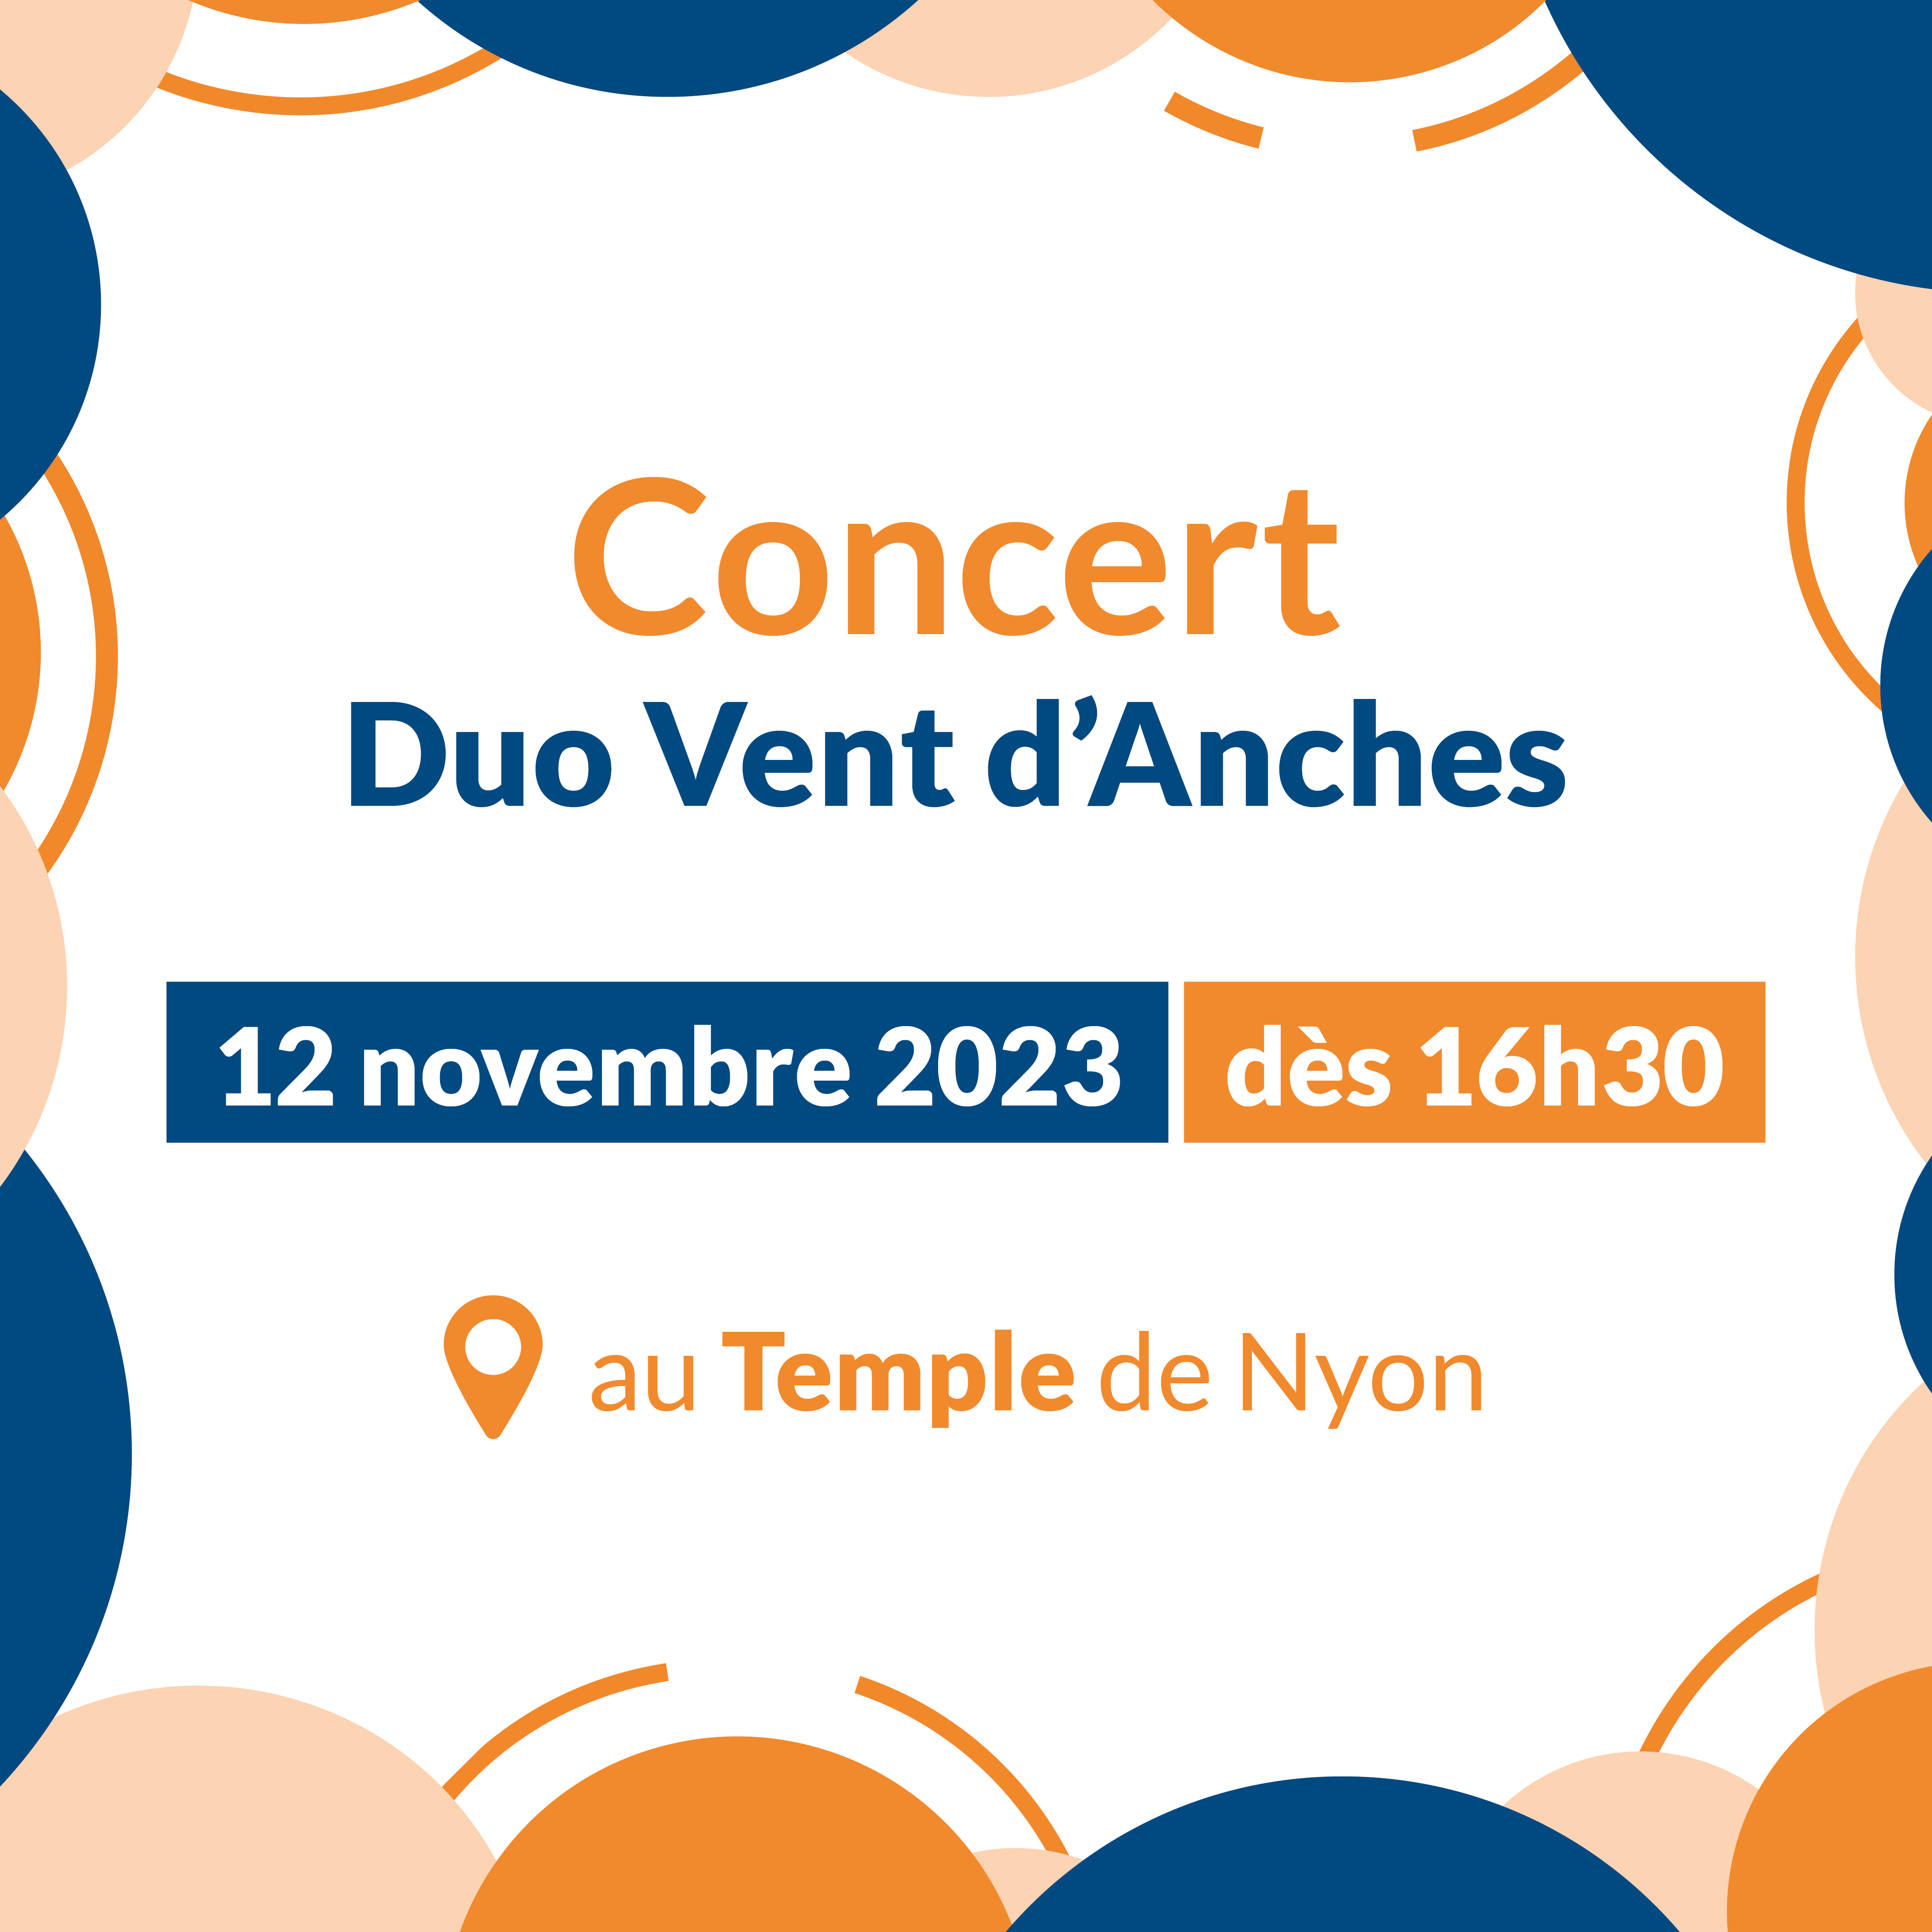 75 EMN - visuel instagram concerts_de_novembre (1080x1080px)1